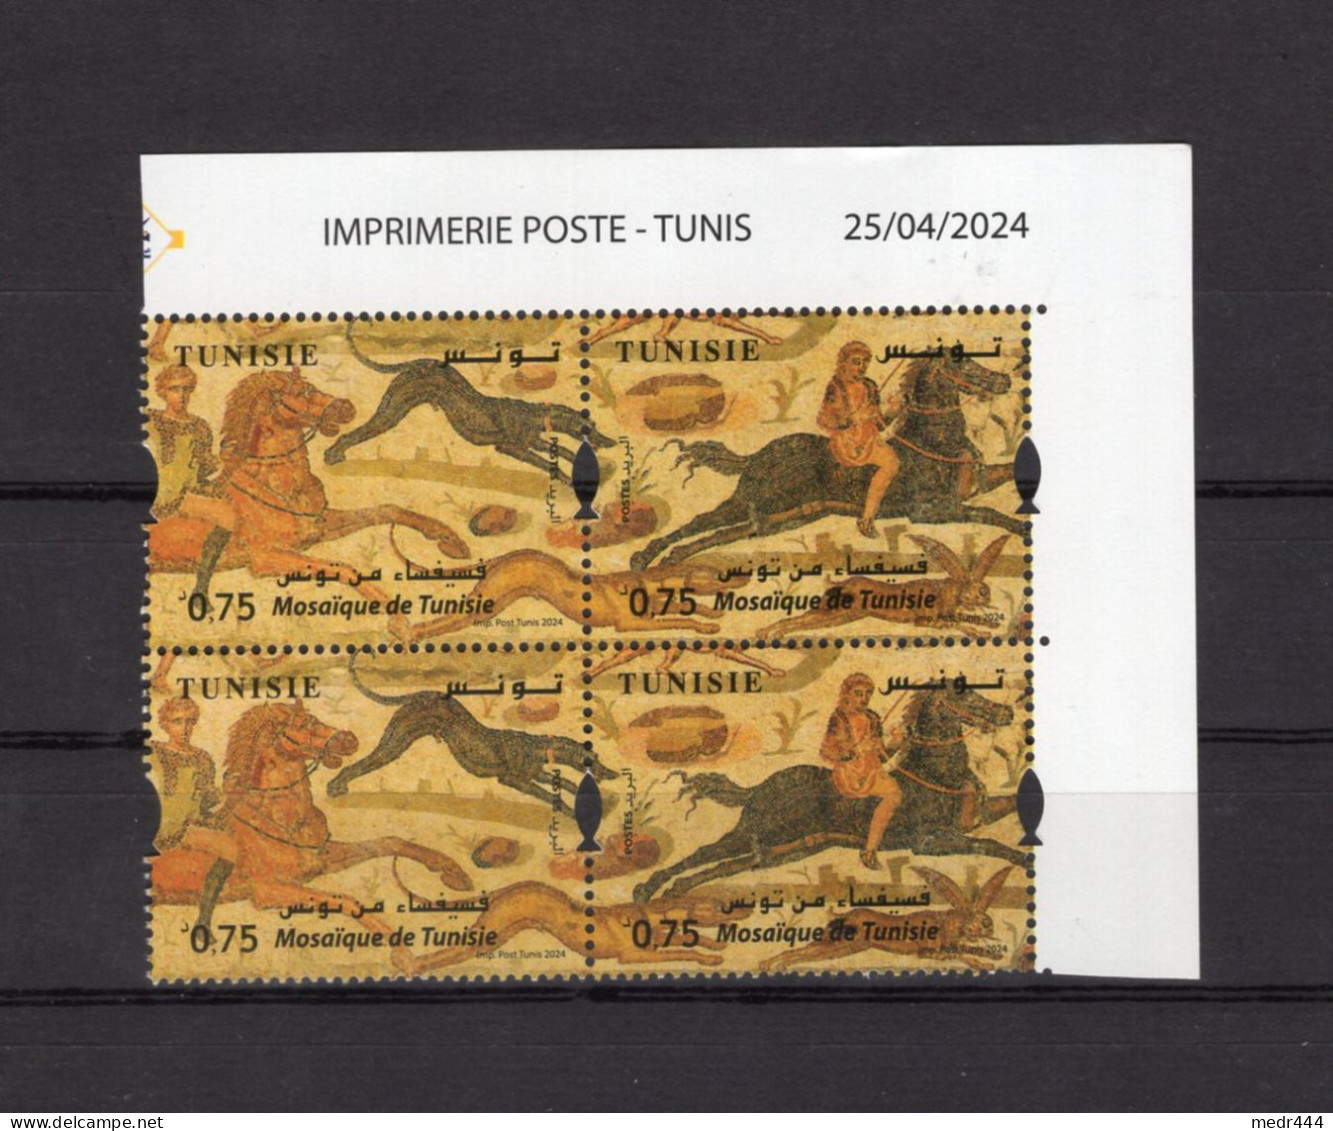 Tunisia/Tunisie 2024 - Mosaics From Tunisia/Mosaïque De Tunisie - Hunting Scene - 2 Strips Of 2 Stamps  - Superb*** - Tunisie (1956-...)